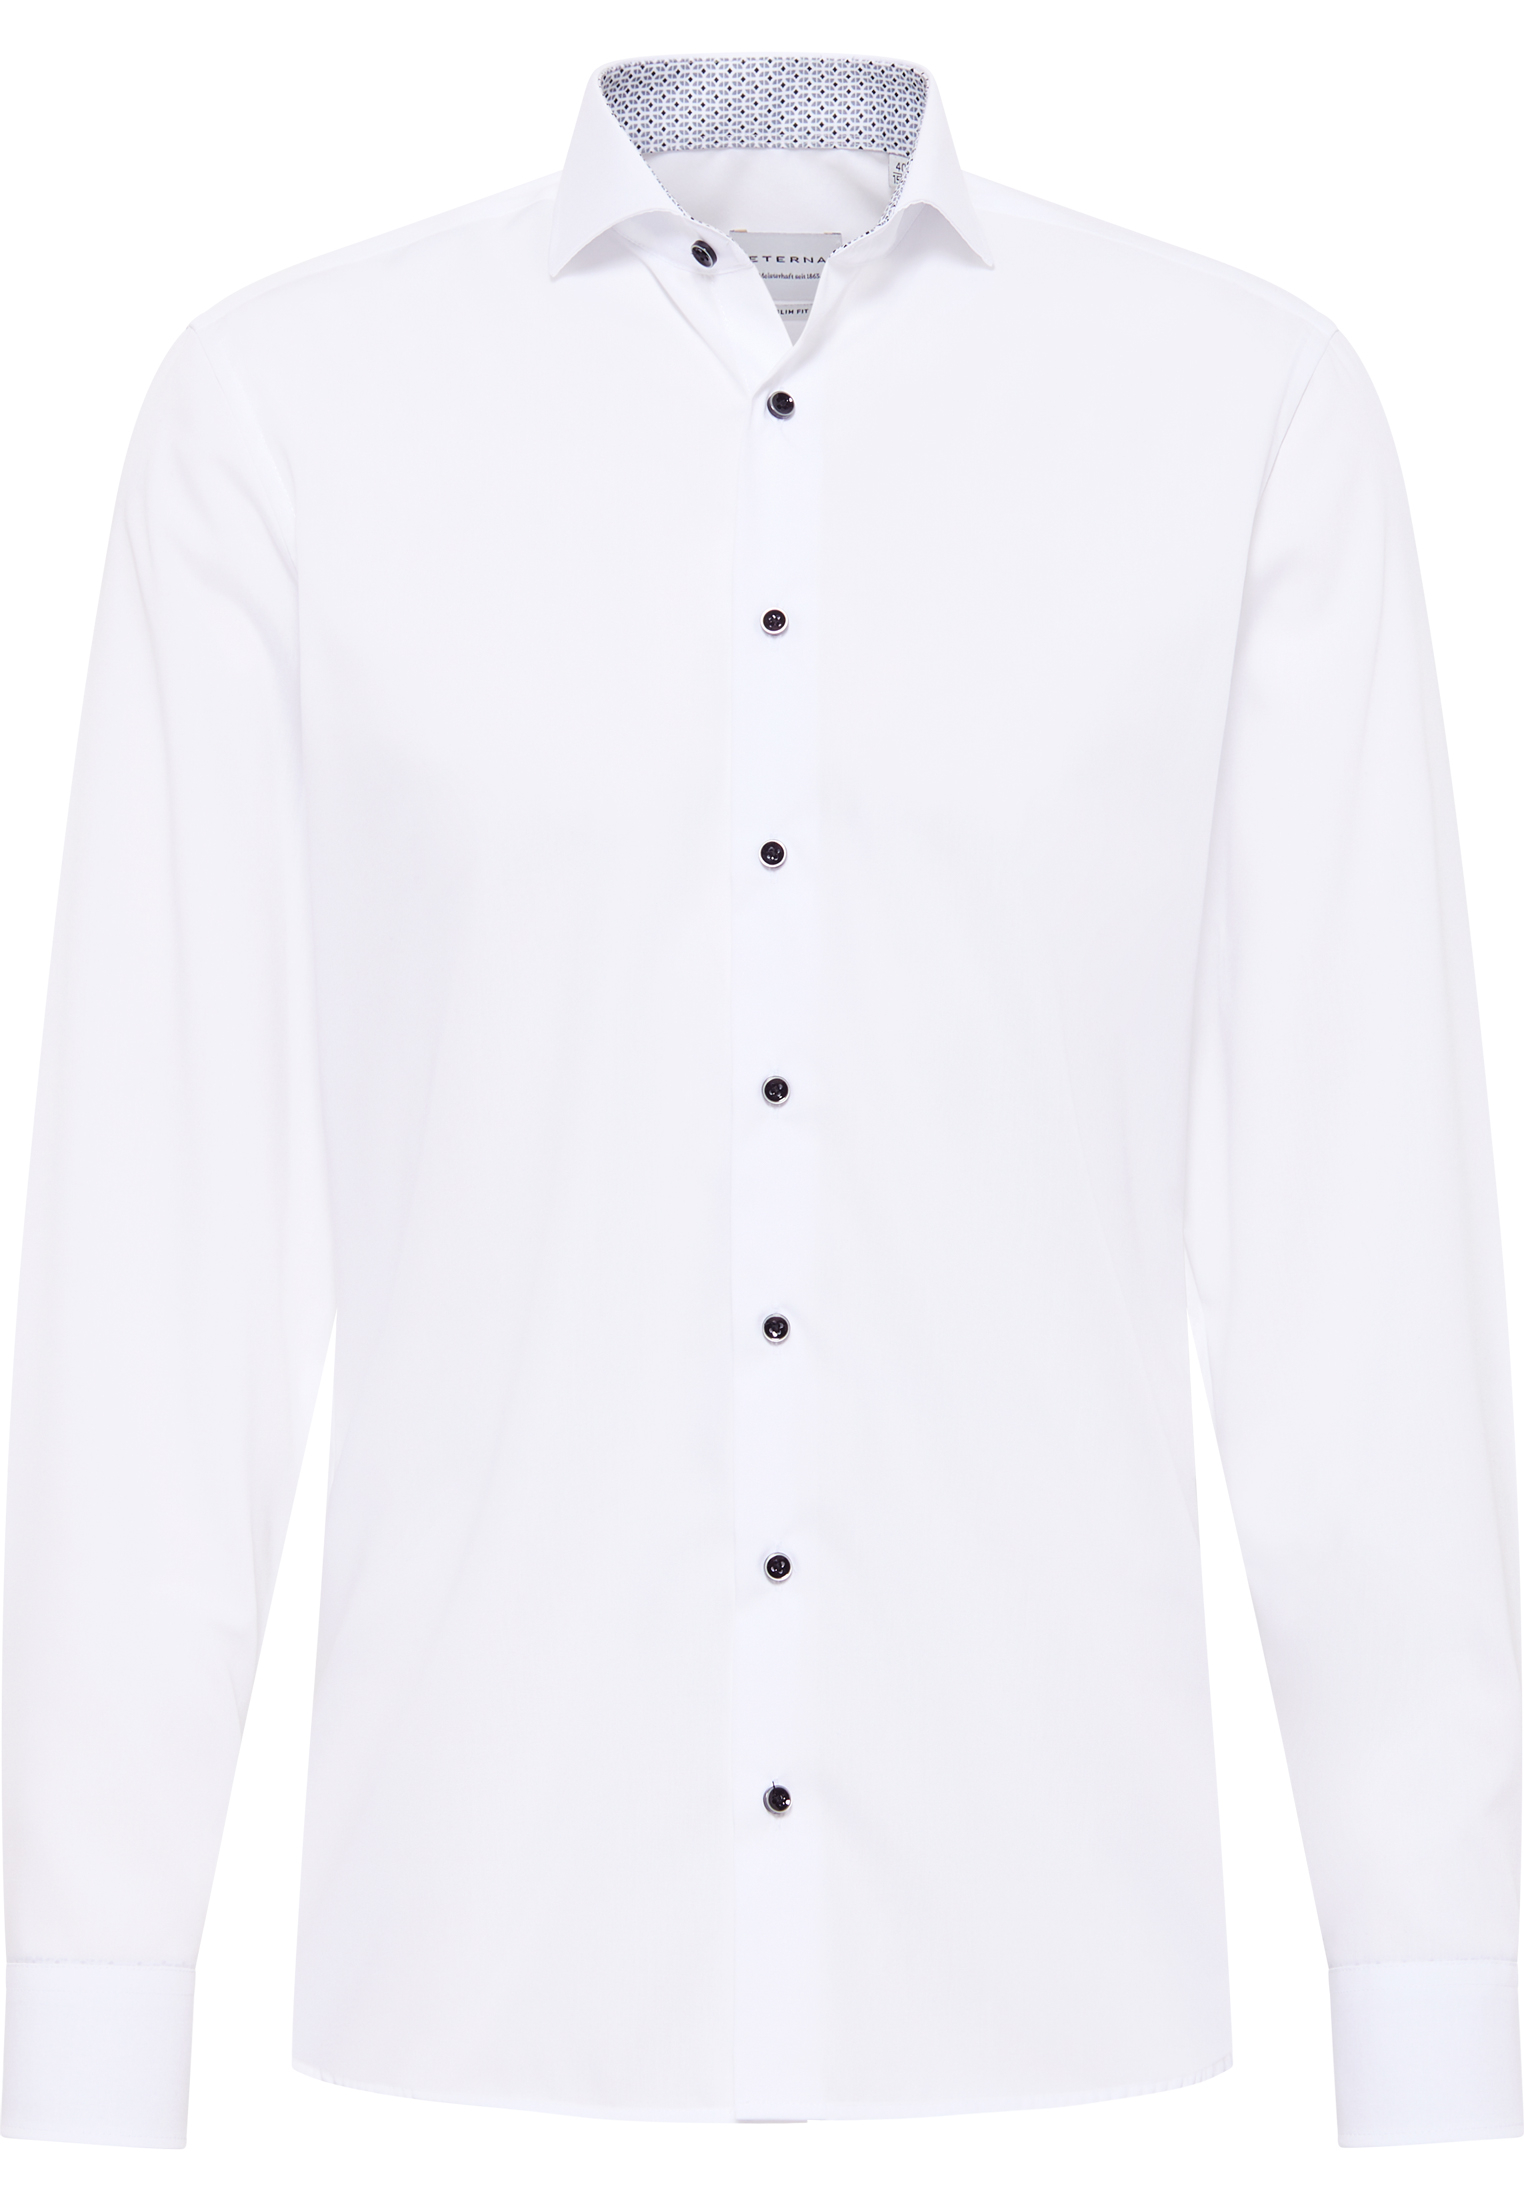 SLIM FIT Original Shirt in weiß unifarben